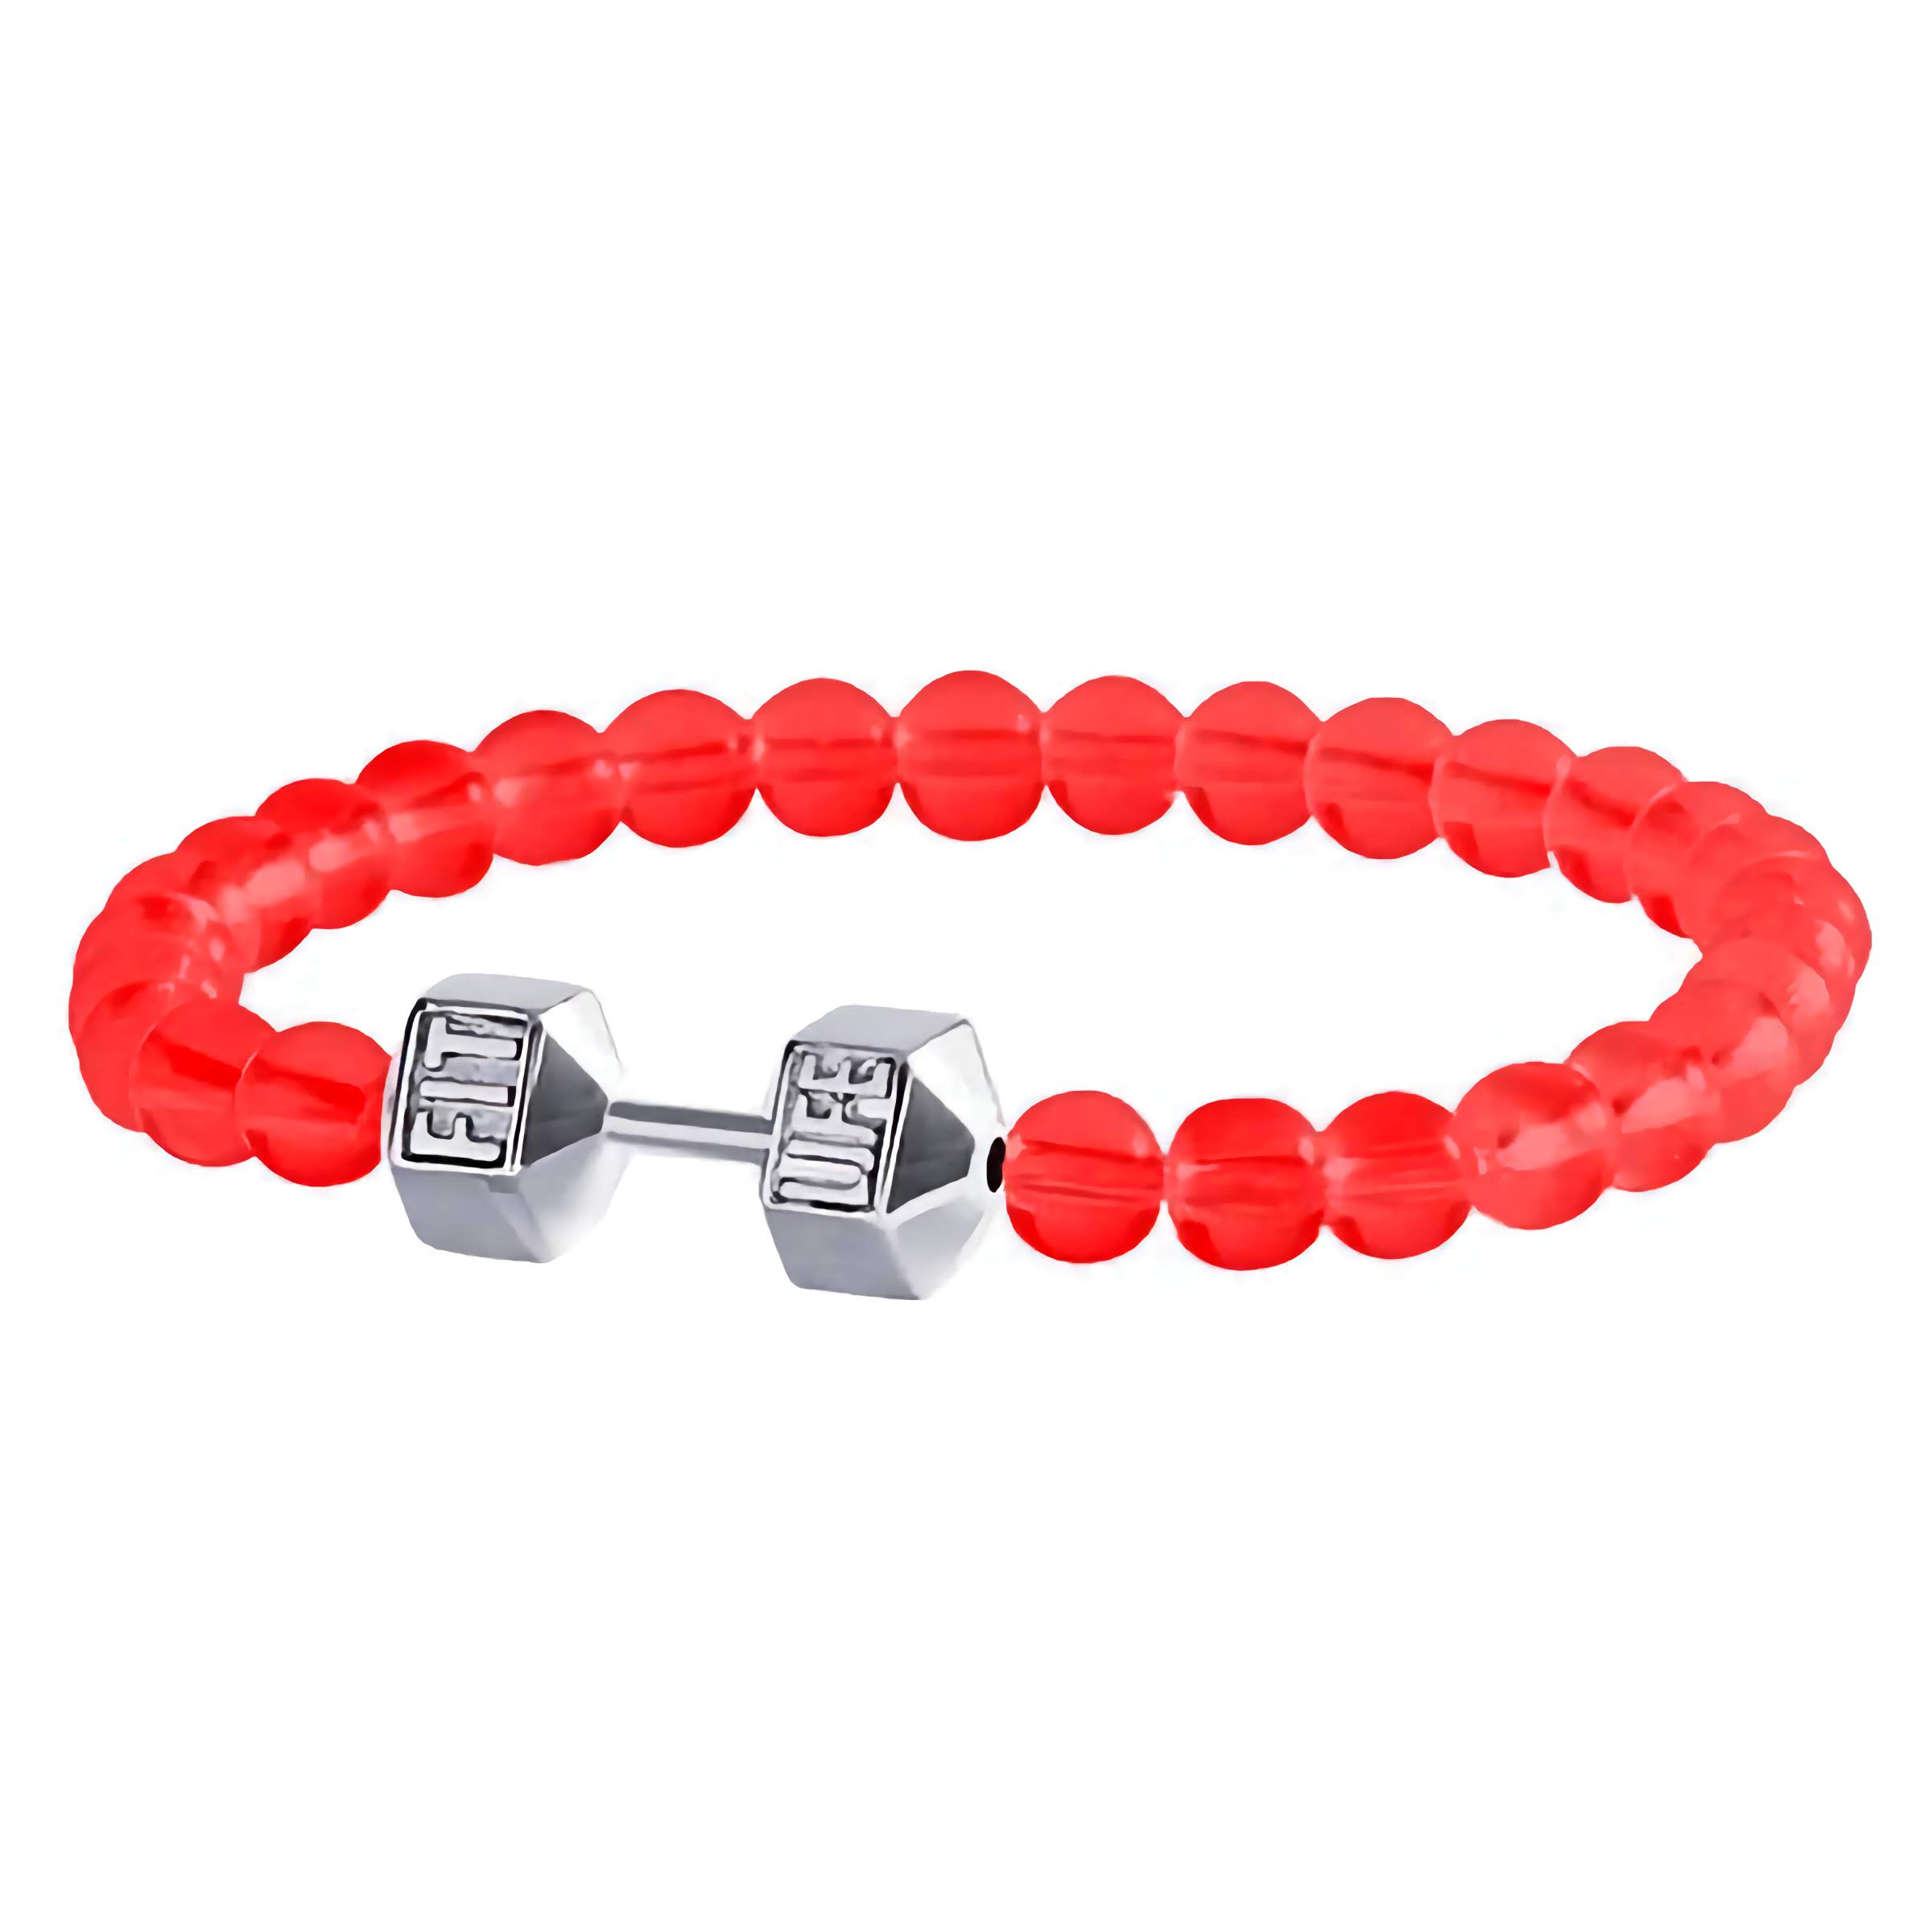 Red dumbbel bracelet